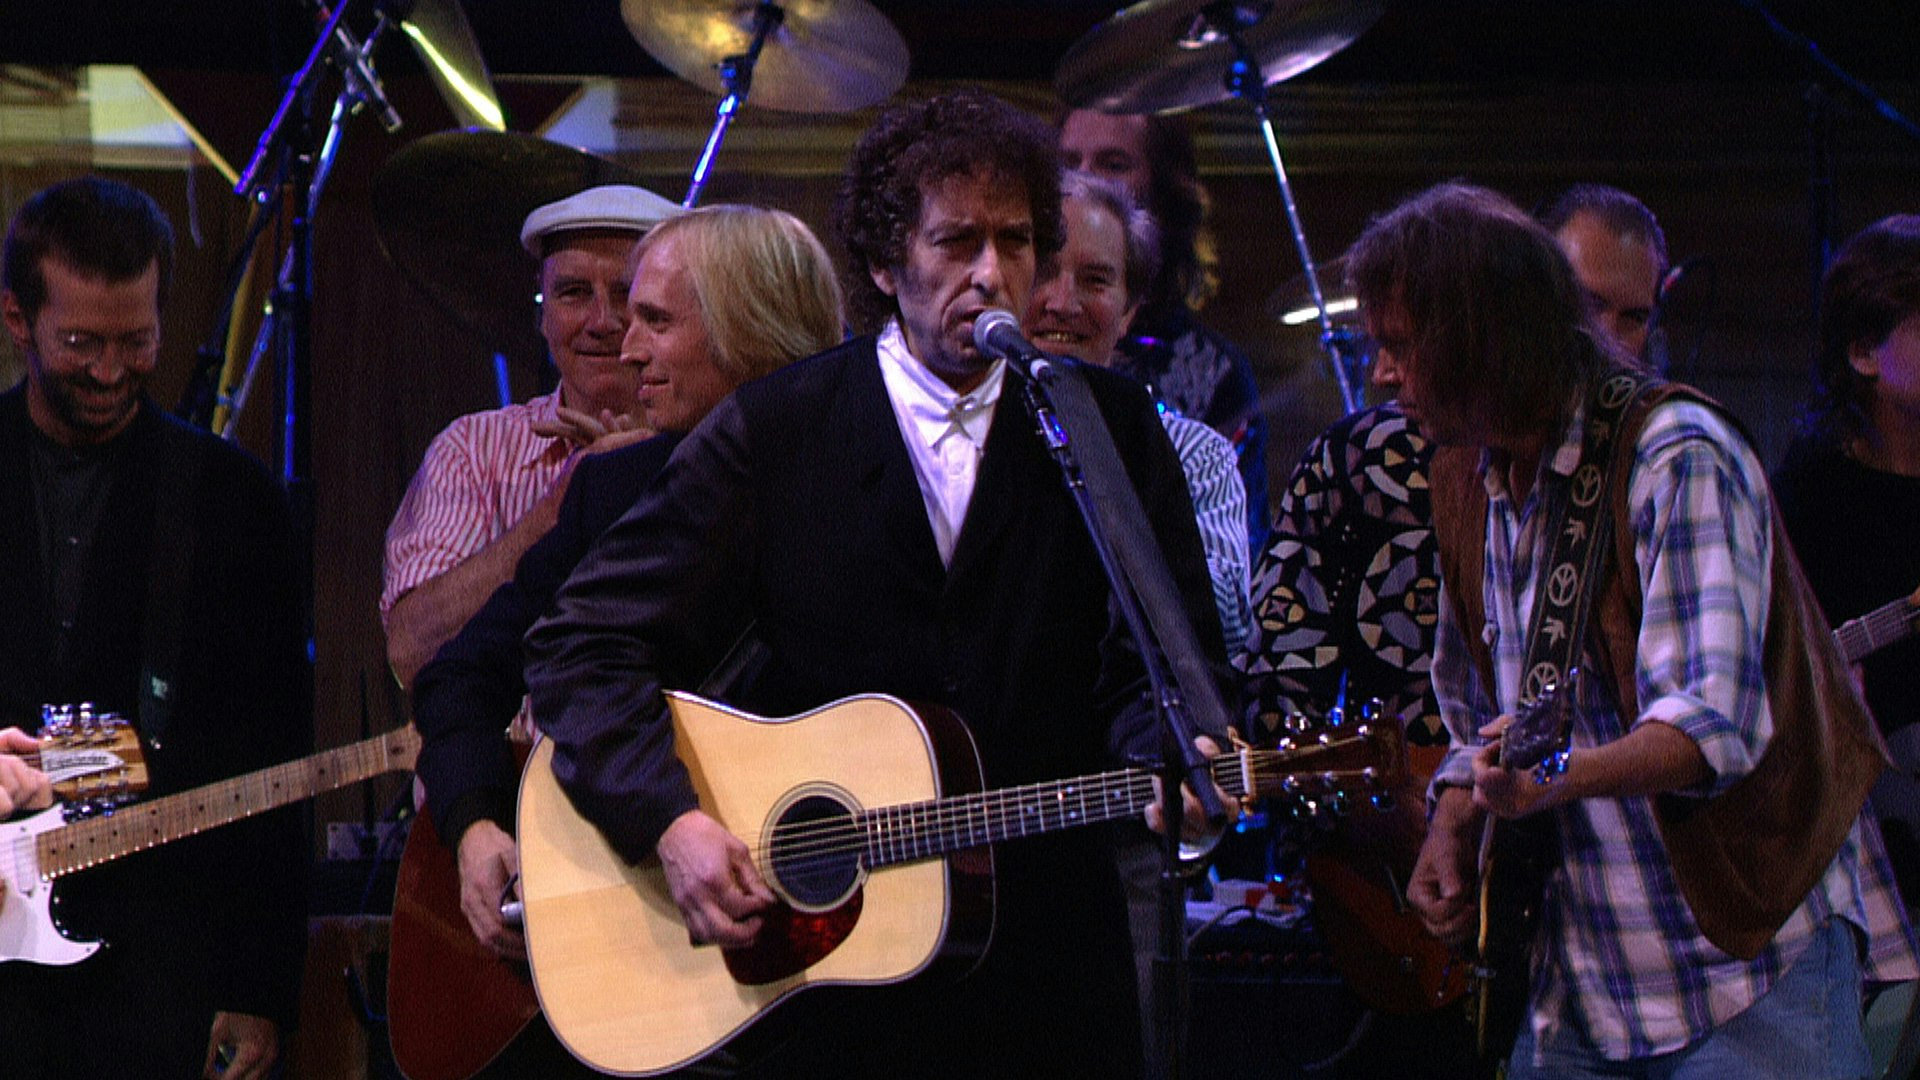 Bob Dylan 30th Anniversary Concert Celebration